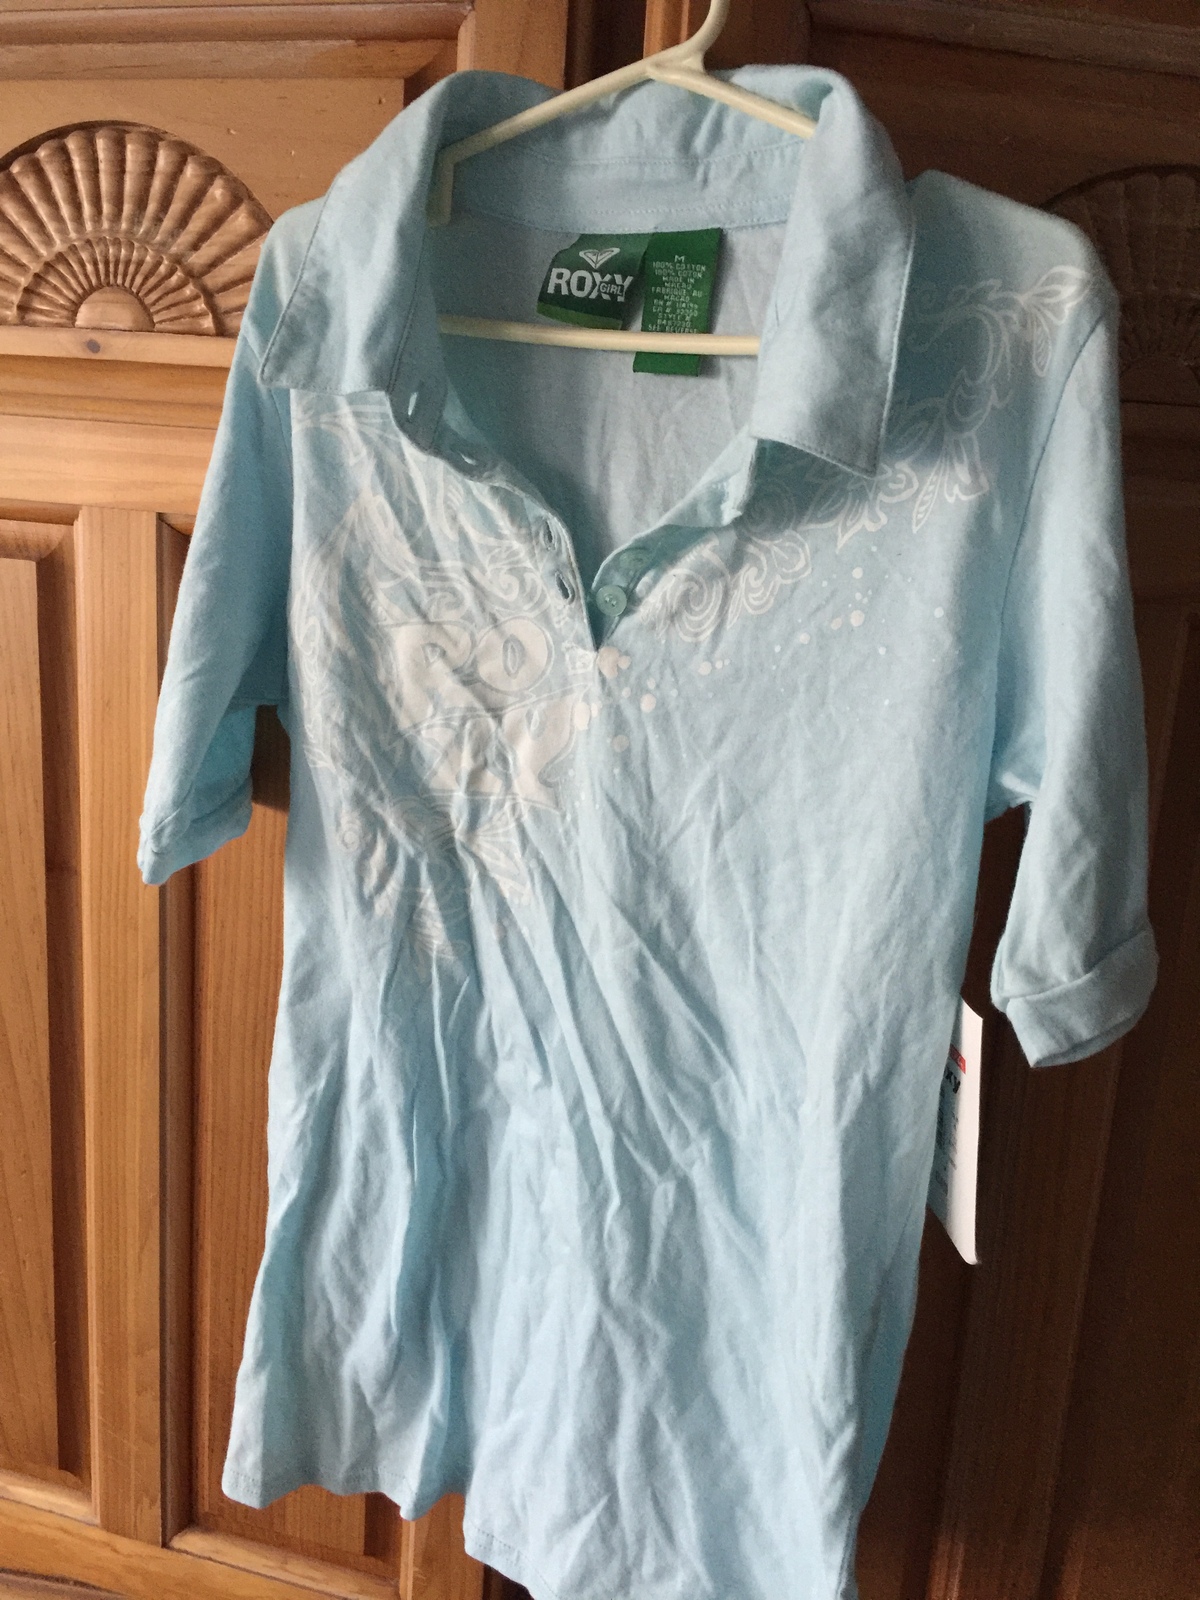 roxy girl short sleeve blue print shirt with small pocket on sleeve size medium - $18.99